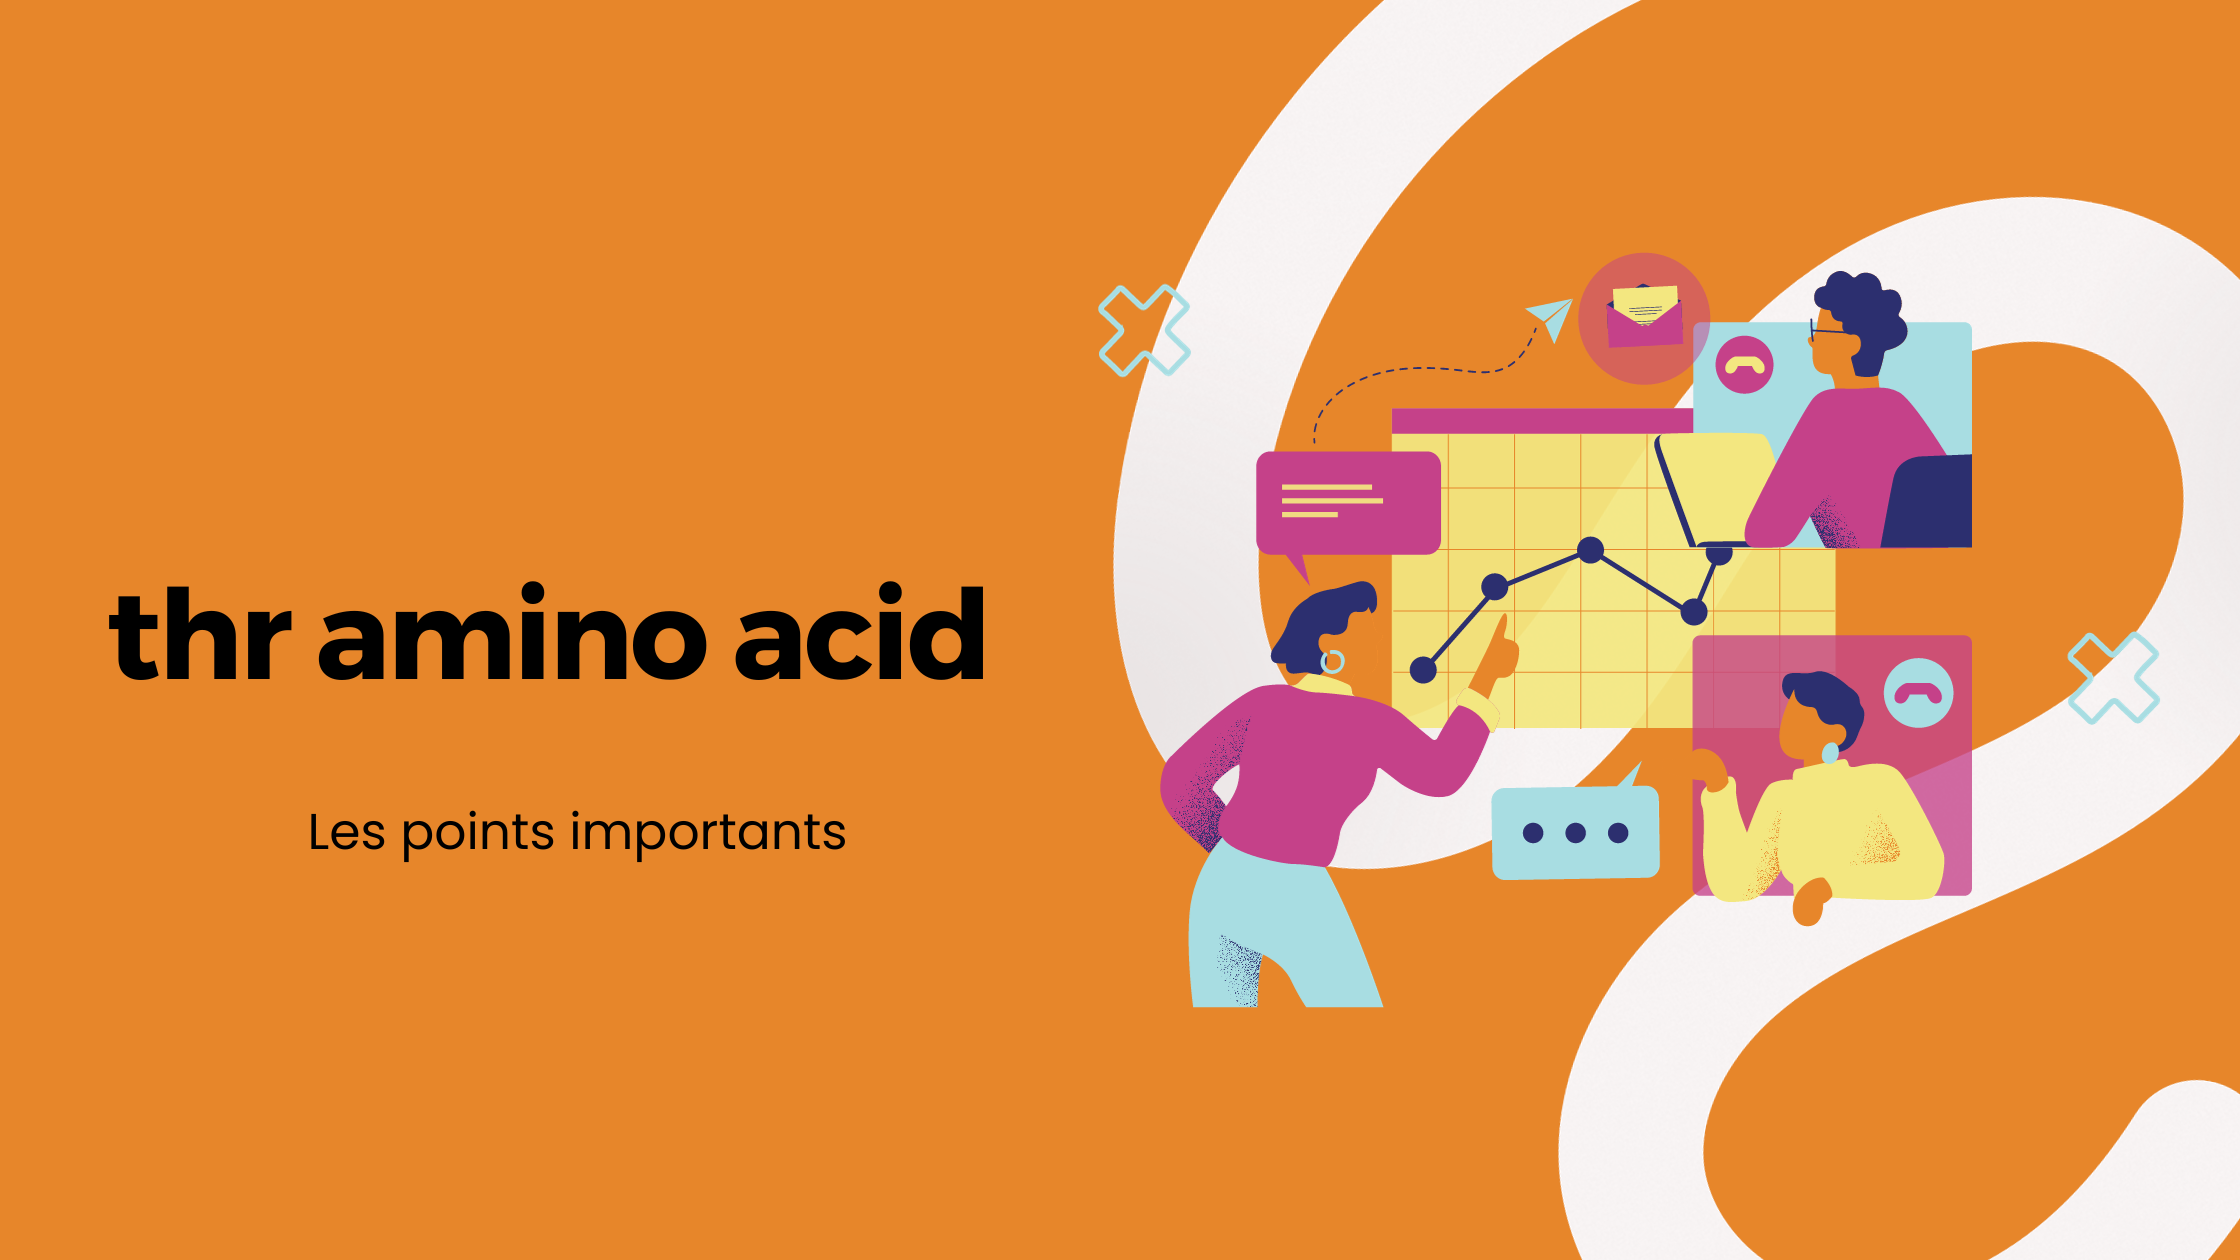 thr amino acid | Les points importants